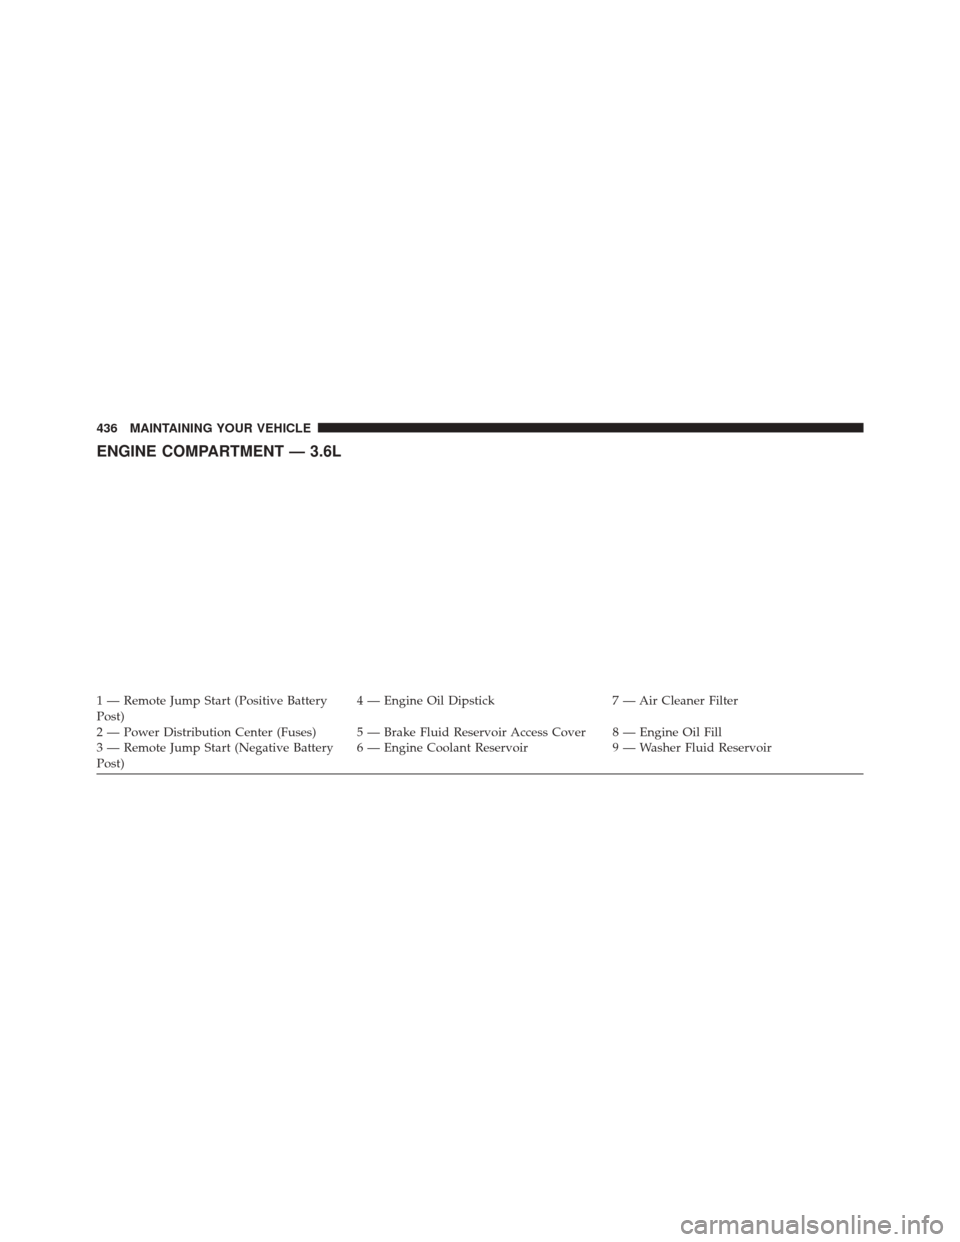 DODGE CHALLENGER 2014 3.G Owners Manual ENGINE COMPARTMENT — 3.6L
1 — Remote Jump Start (Positive Battery
Post)4 — Engine Oil Dipstick
7 — Air Cleaner Filter
2 — Power Distribution Center (Fuses) 5 — Brake Fluid Reservoir Access